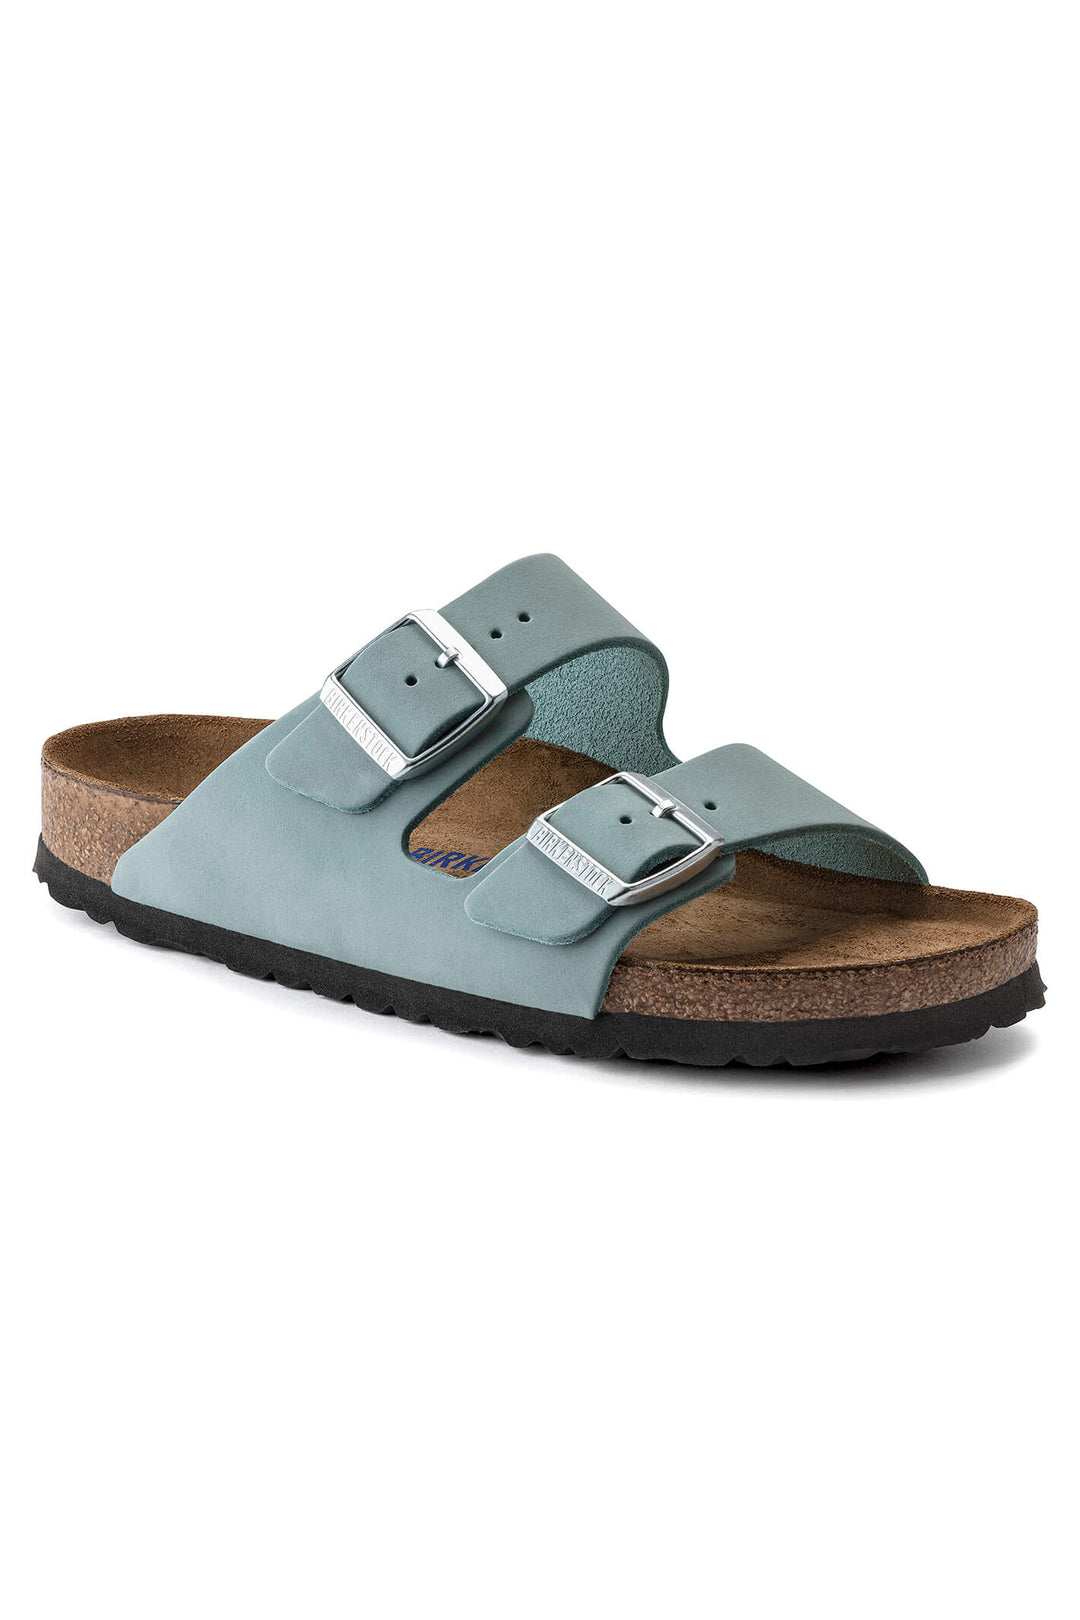 Birkenstock Arizona 1021446 Faded Aqua SFB Narrow Fit Sandal - Shirley Allum Boutique